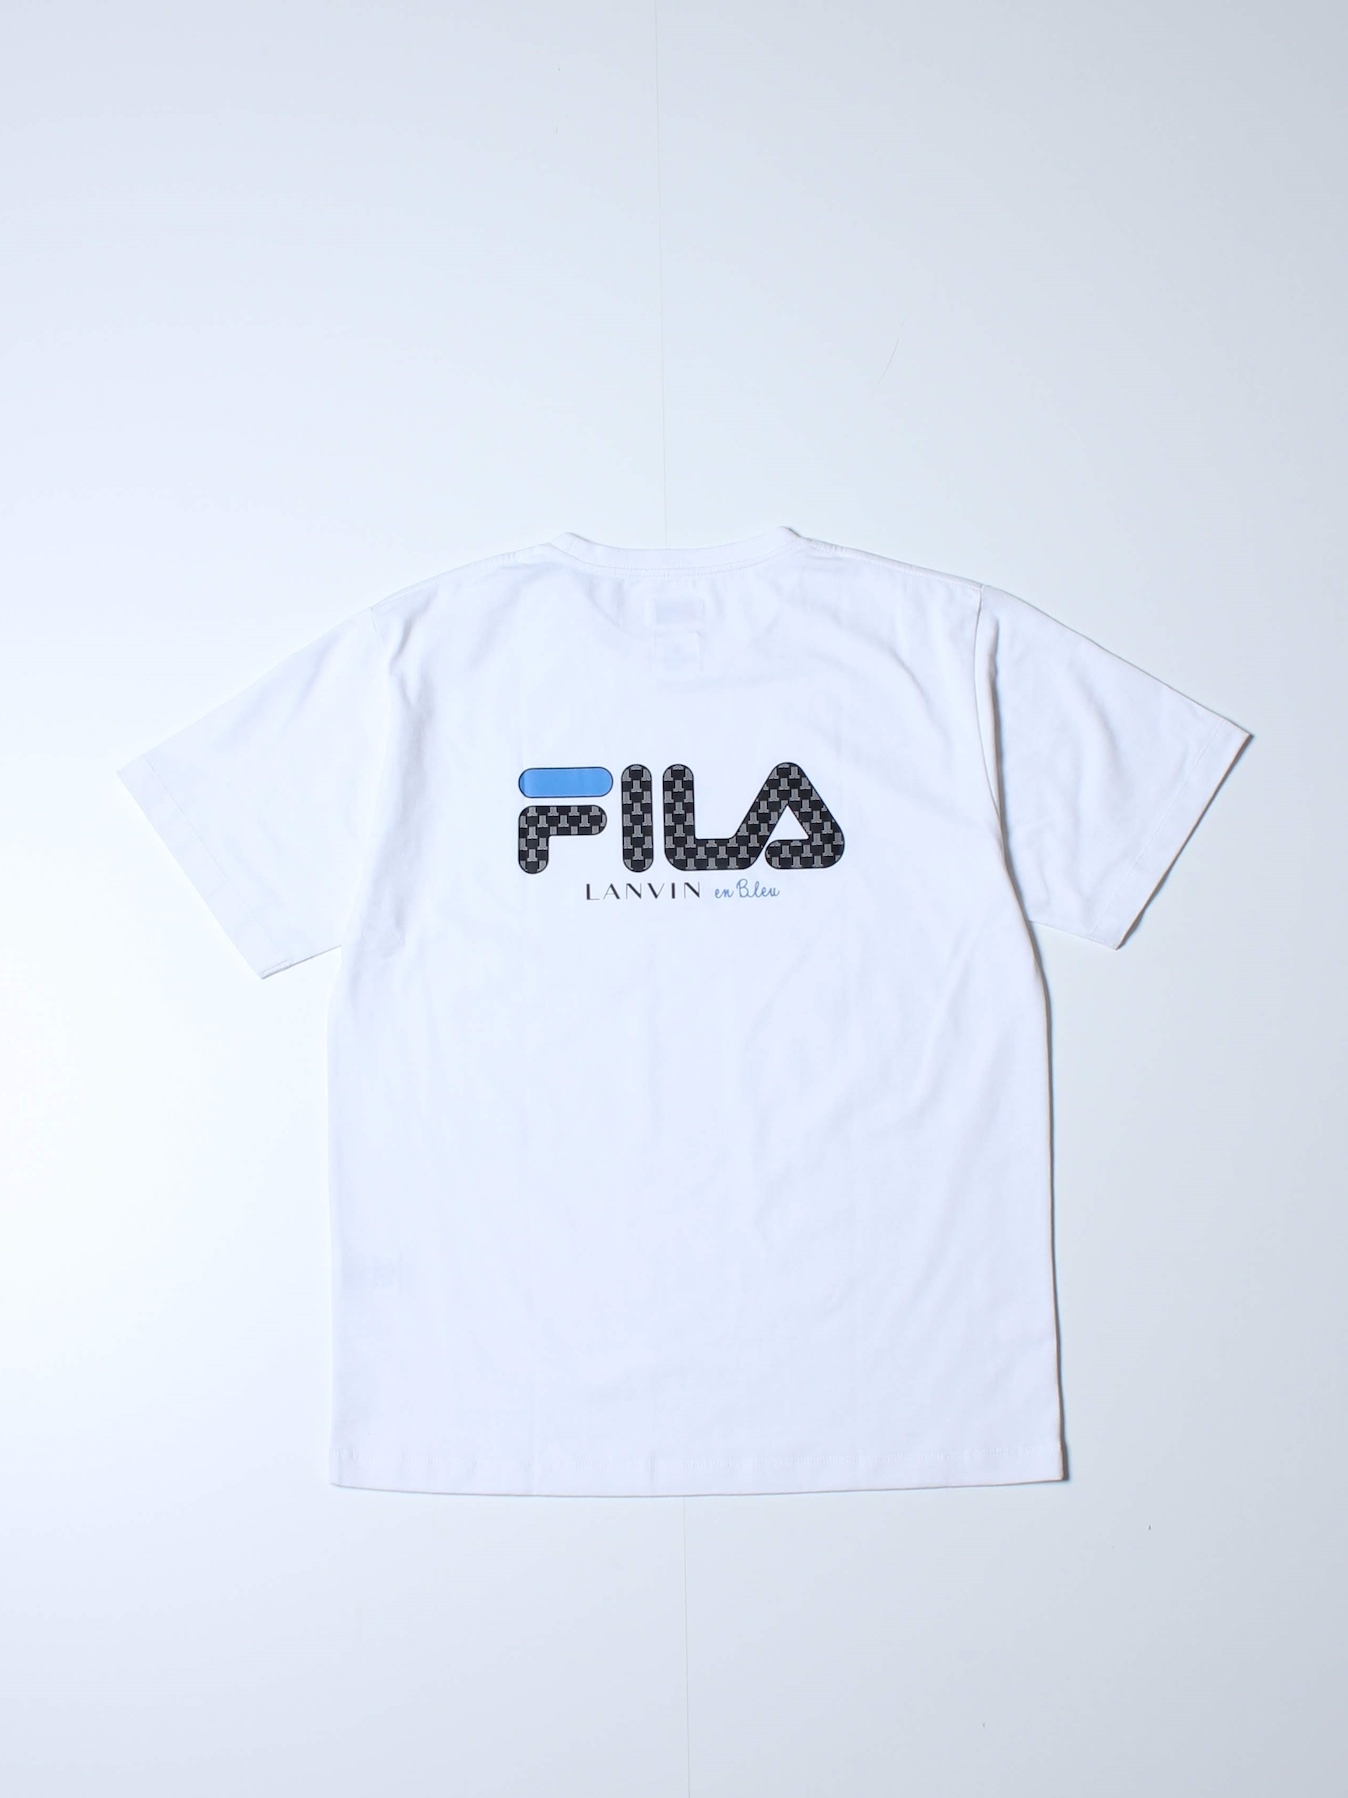 FILA×LANVIN en Bleu、限定ロゴマークのコラボアイテム発売